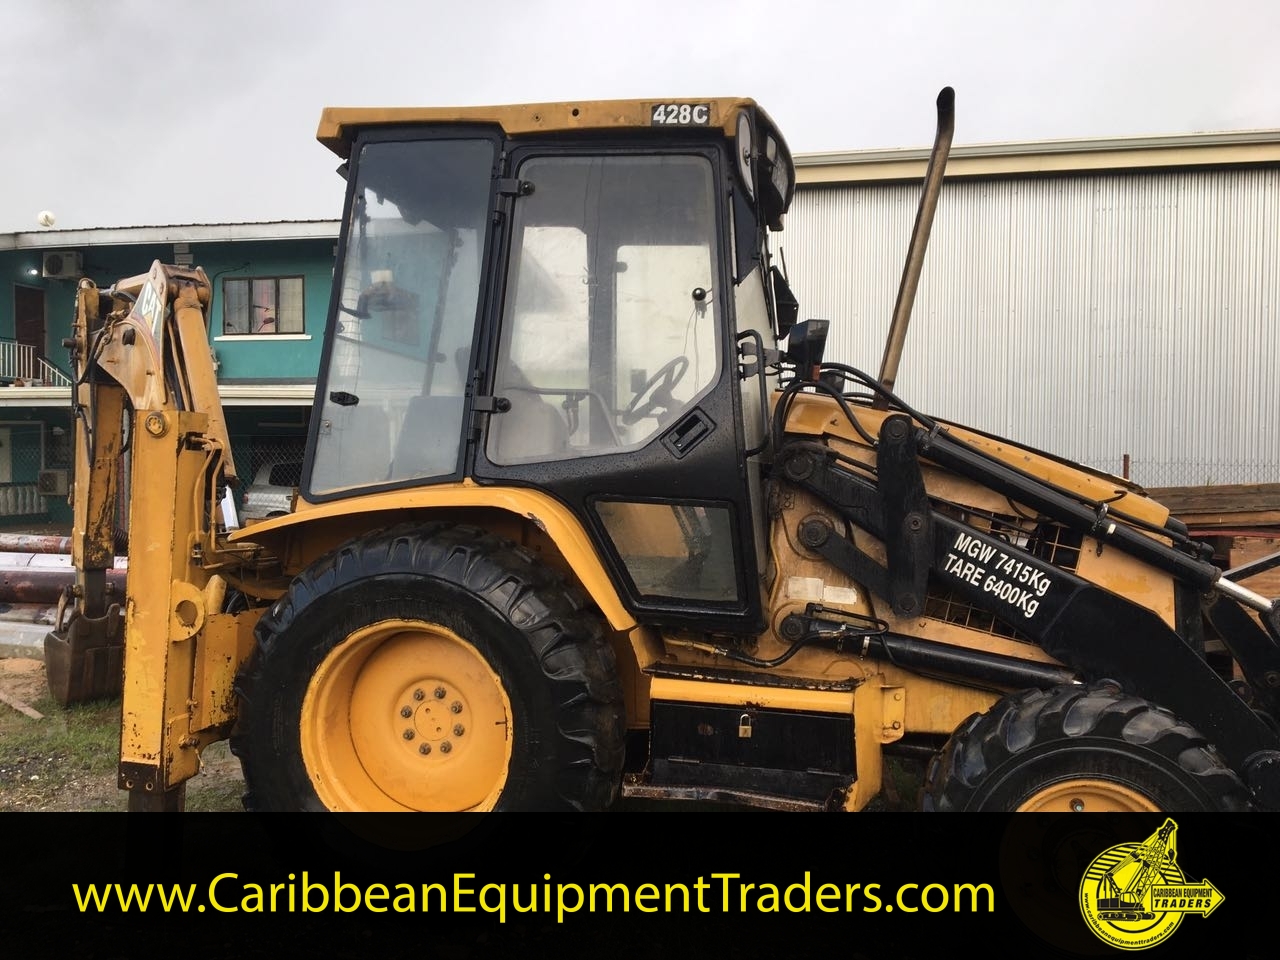 CAT Backhoe 428C for sale | Caribbean Equipment online classifieds for